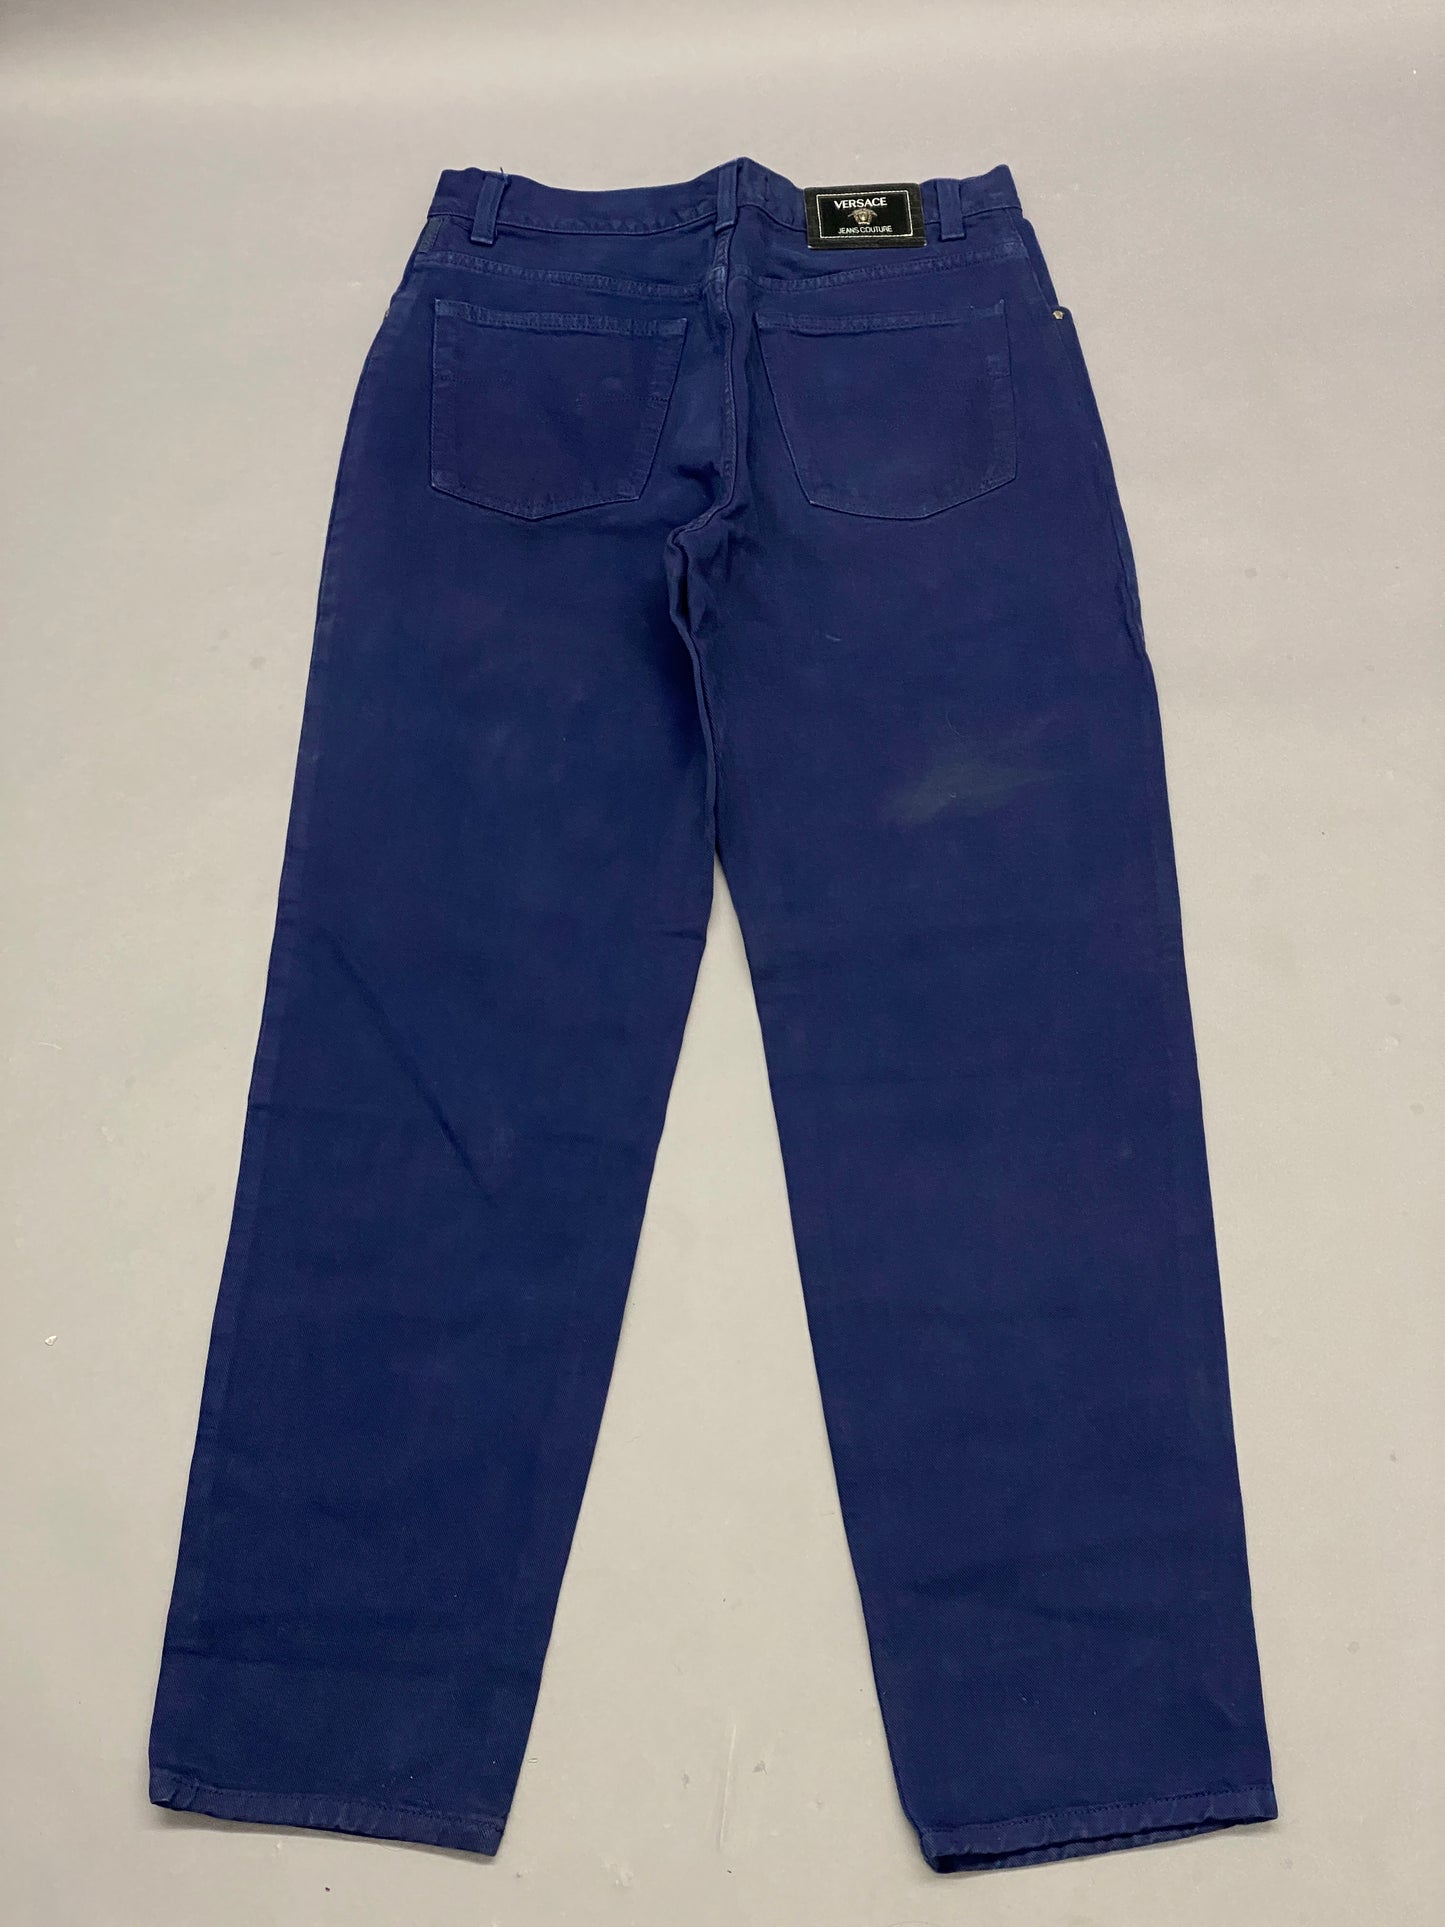 Jeans Versace Navy Vintage - 32